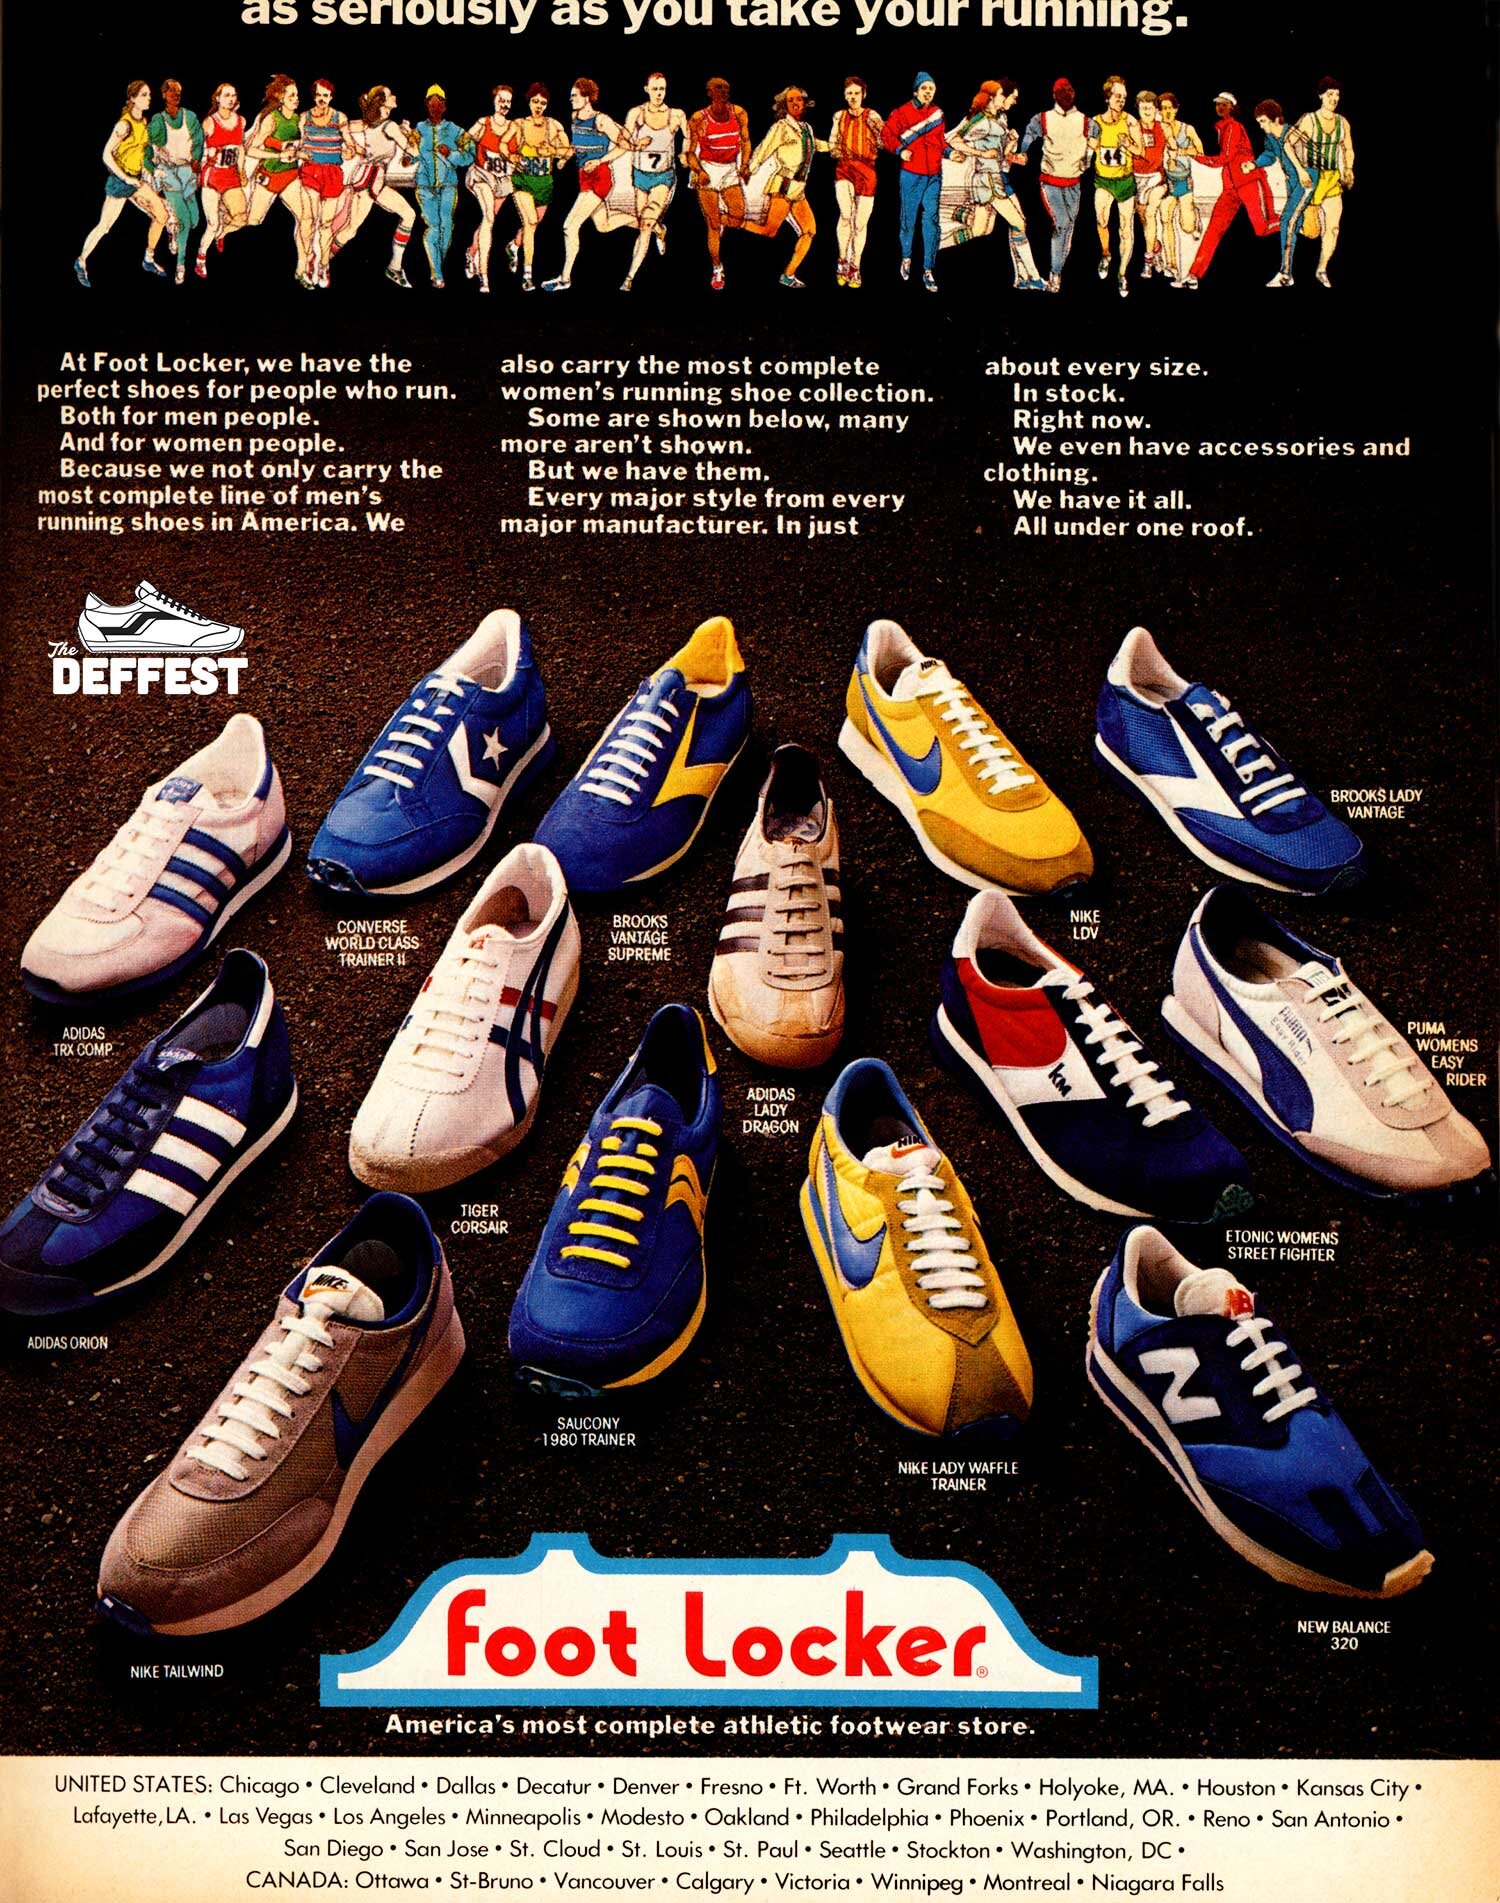 foot locker — The Deffest®. A vintage and retro sneaker blog. — Vintage Ads